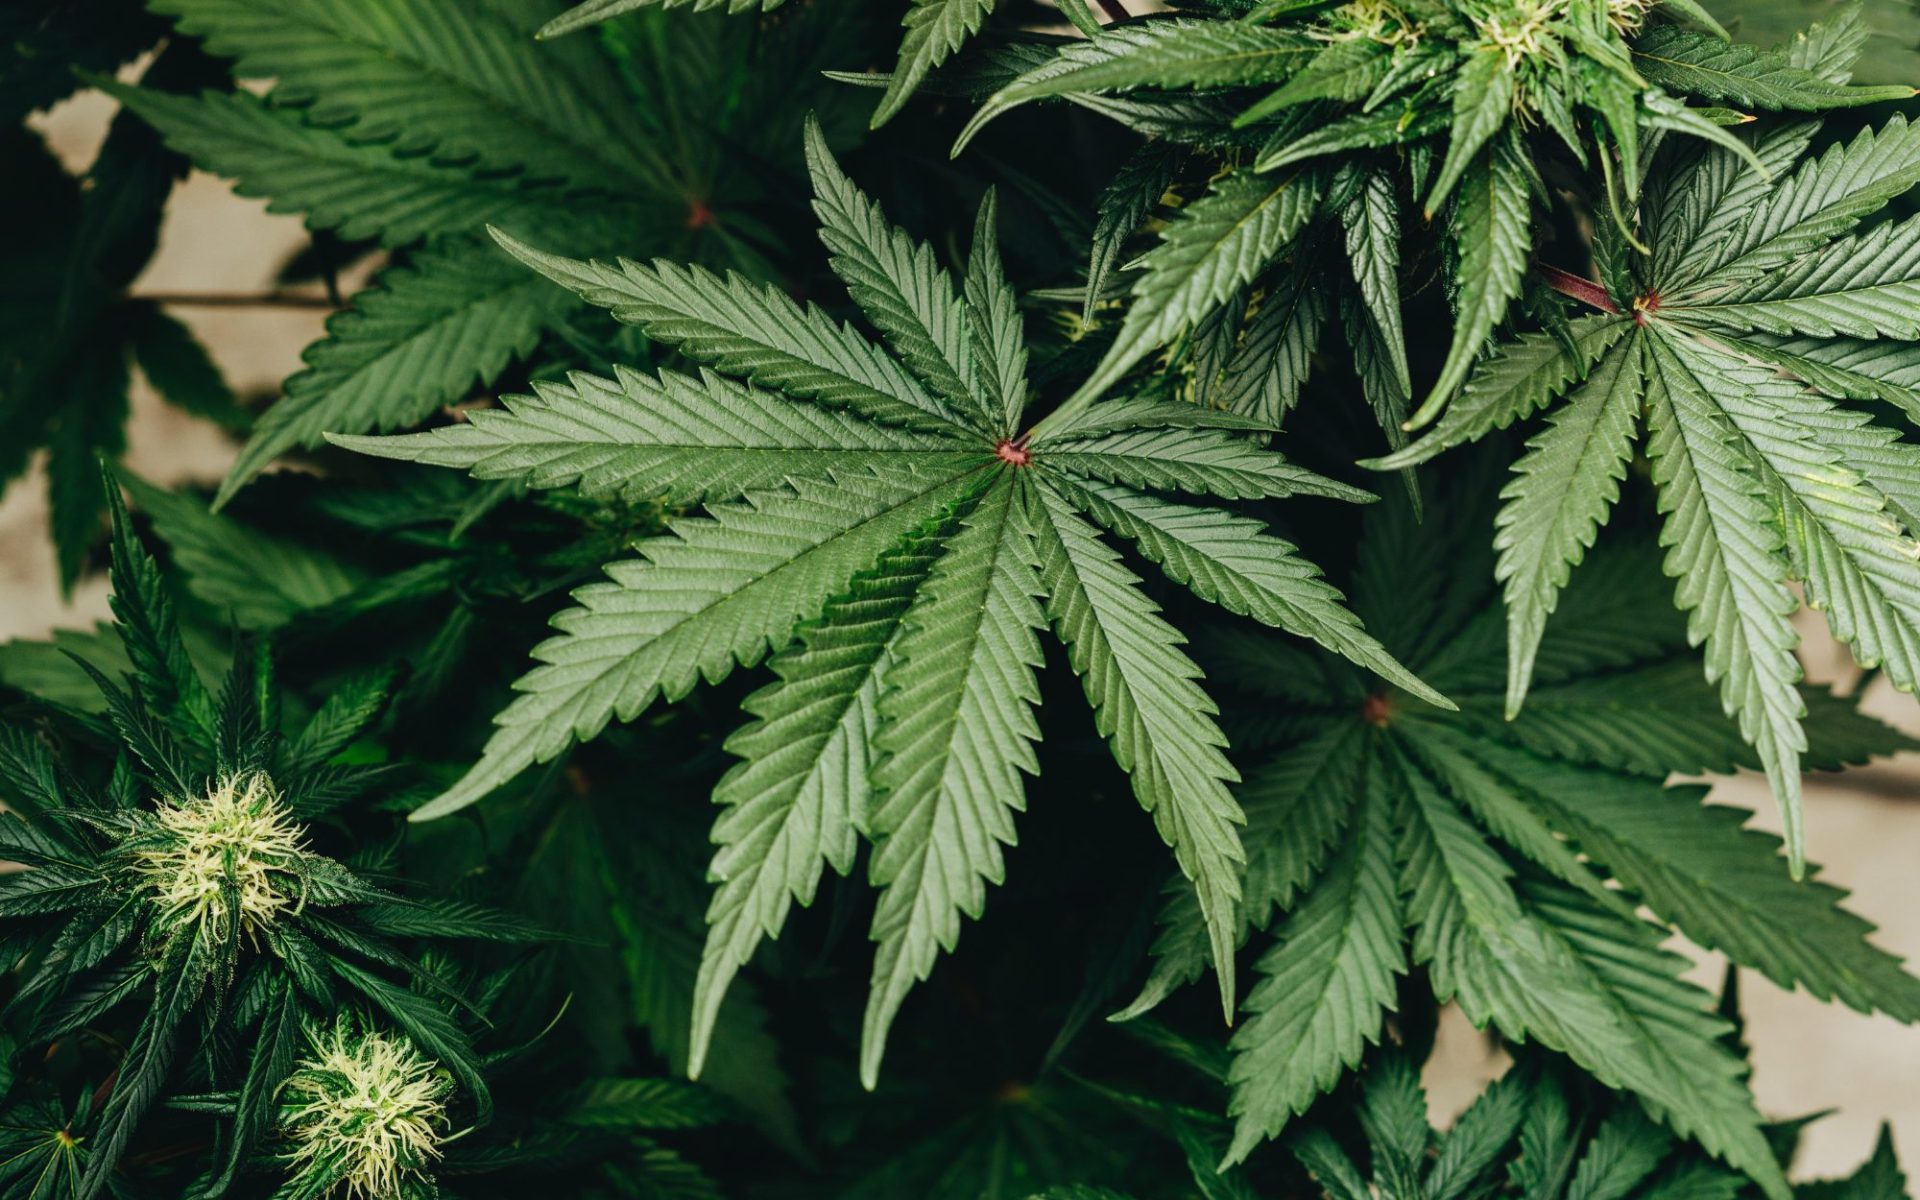 up close image of marijuana plant